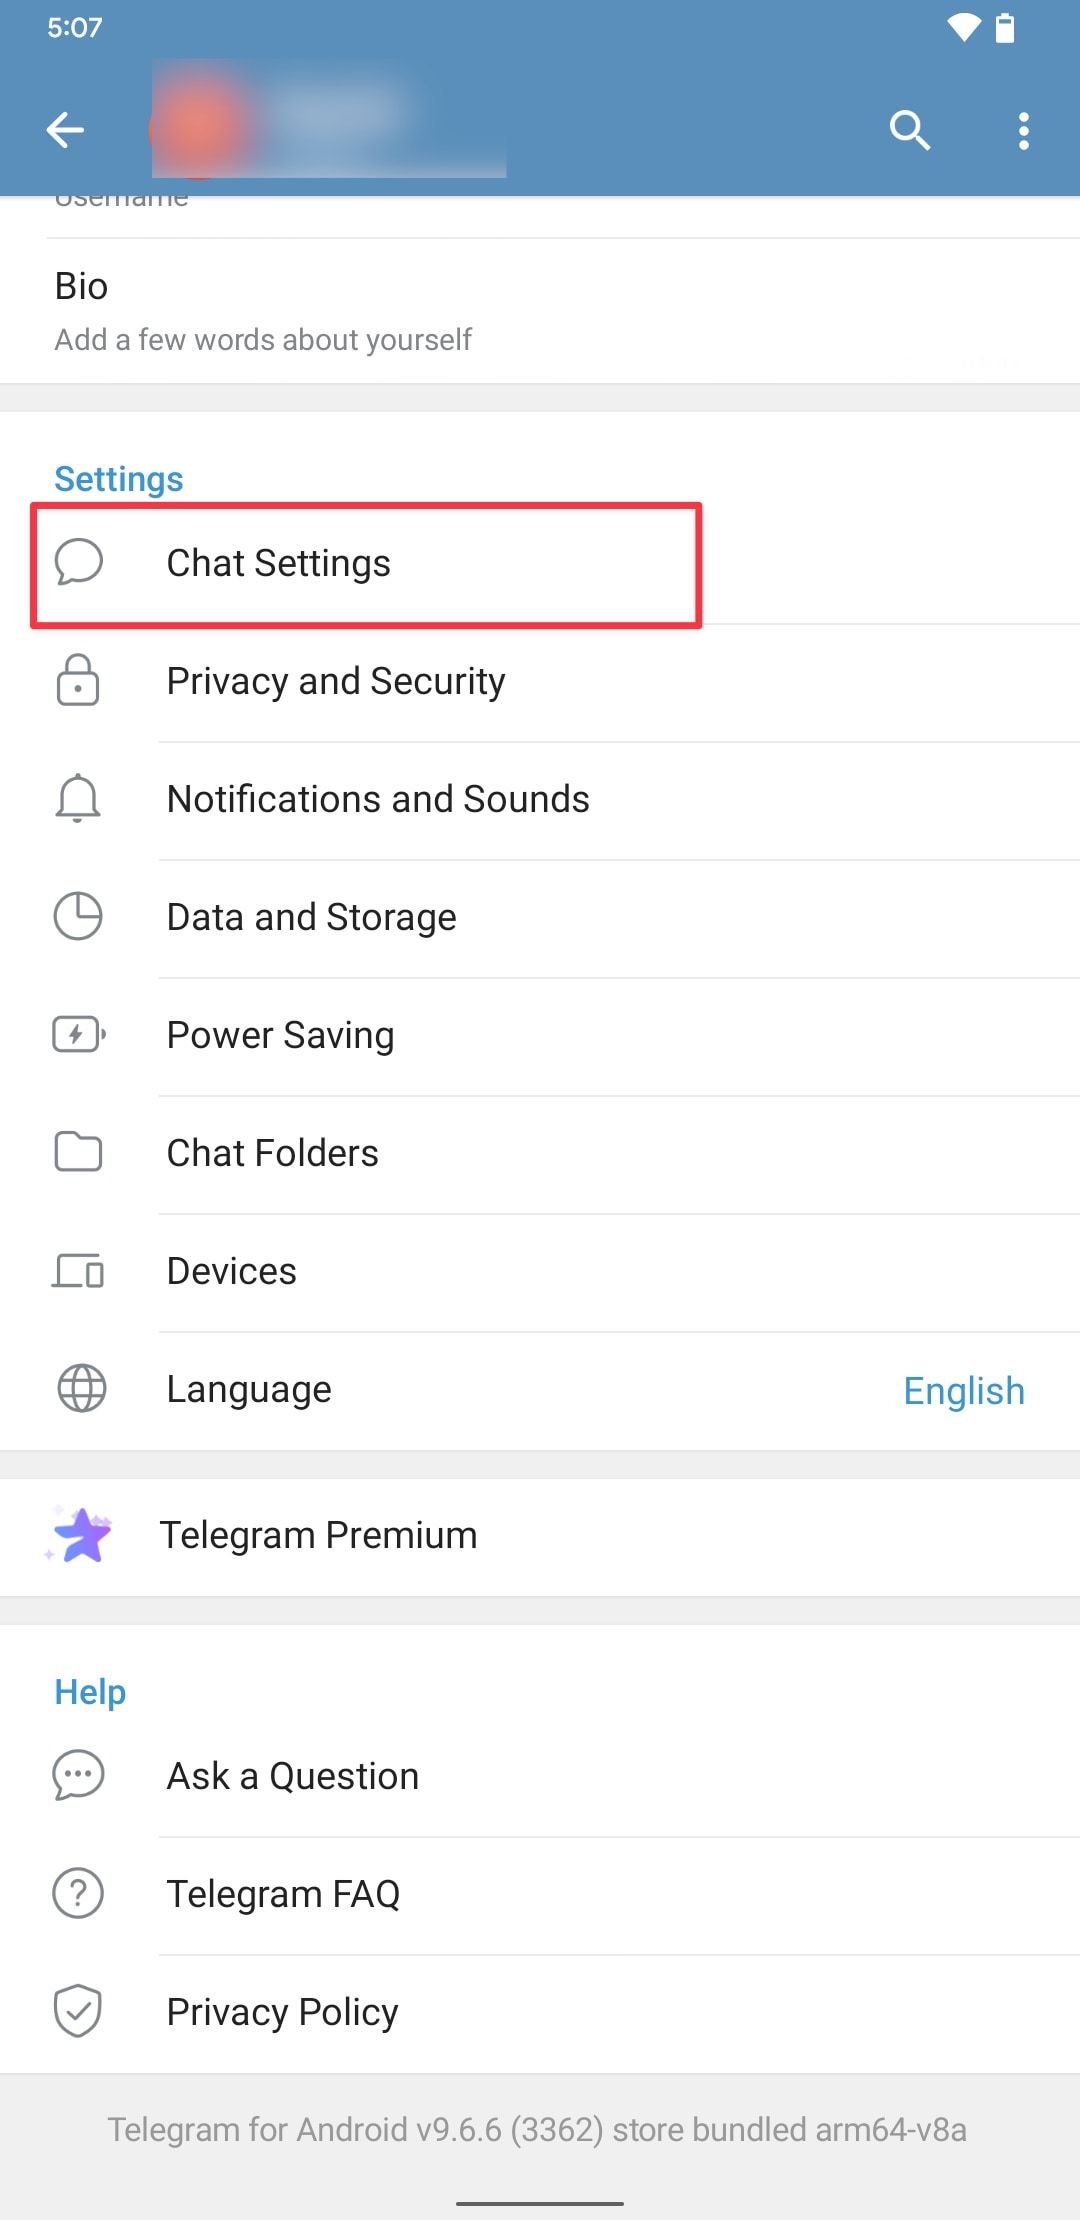 Telegram settings page screenshot showing Chat Settings option